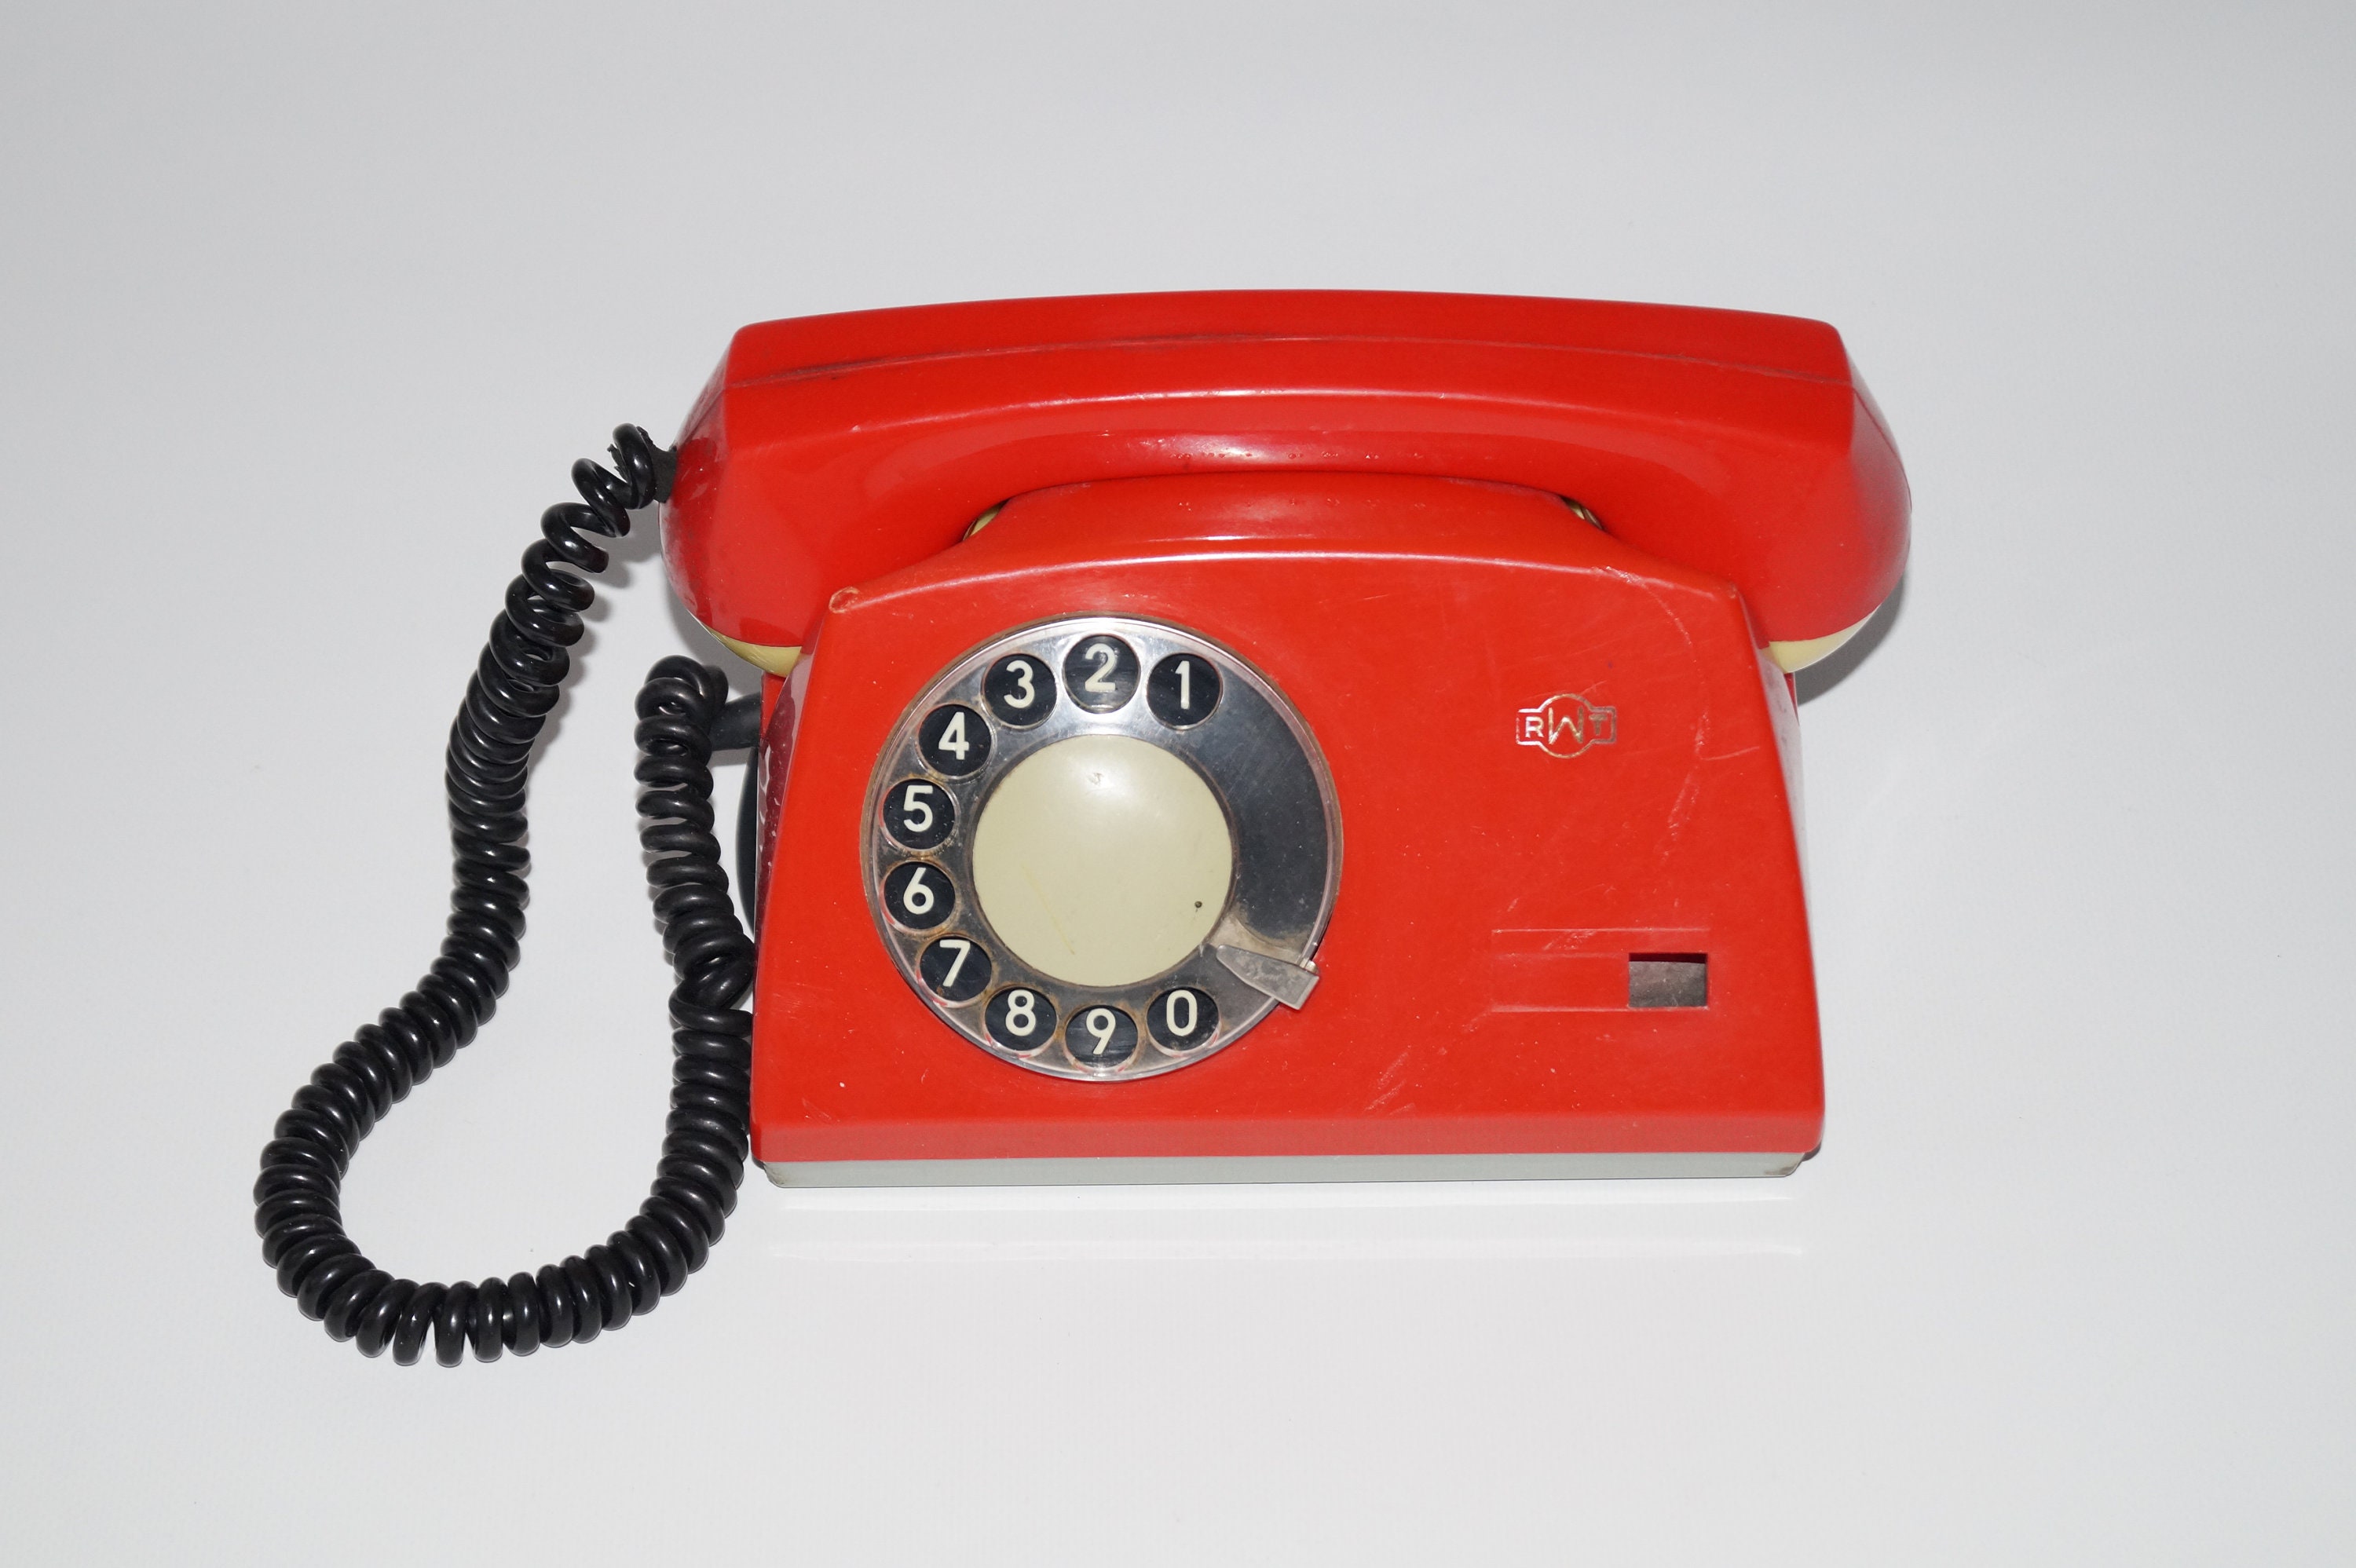 50 90 90 телефон. Телефонный аппарат спектр та-1146. Советский телефонный аппарат. Красный телефонный аппарат. Старинный телефонный аппарат.